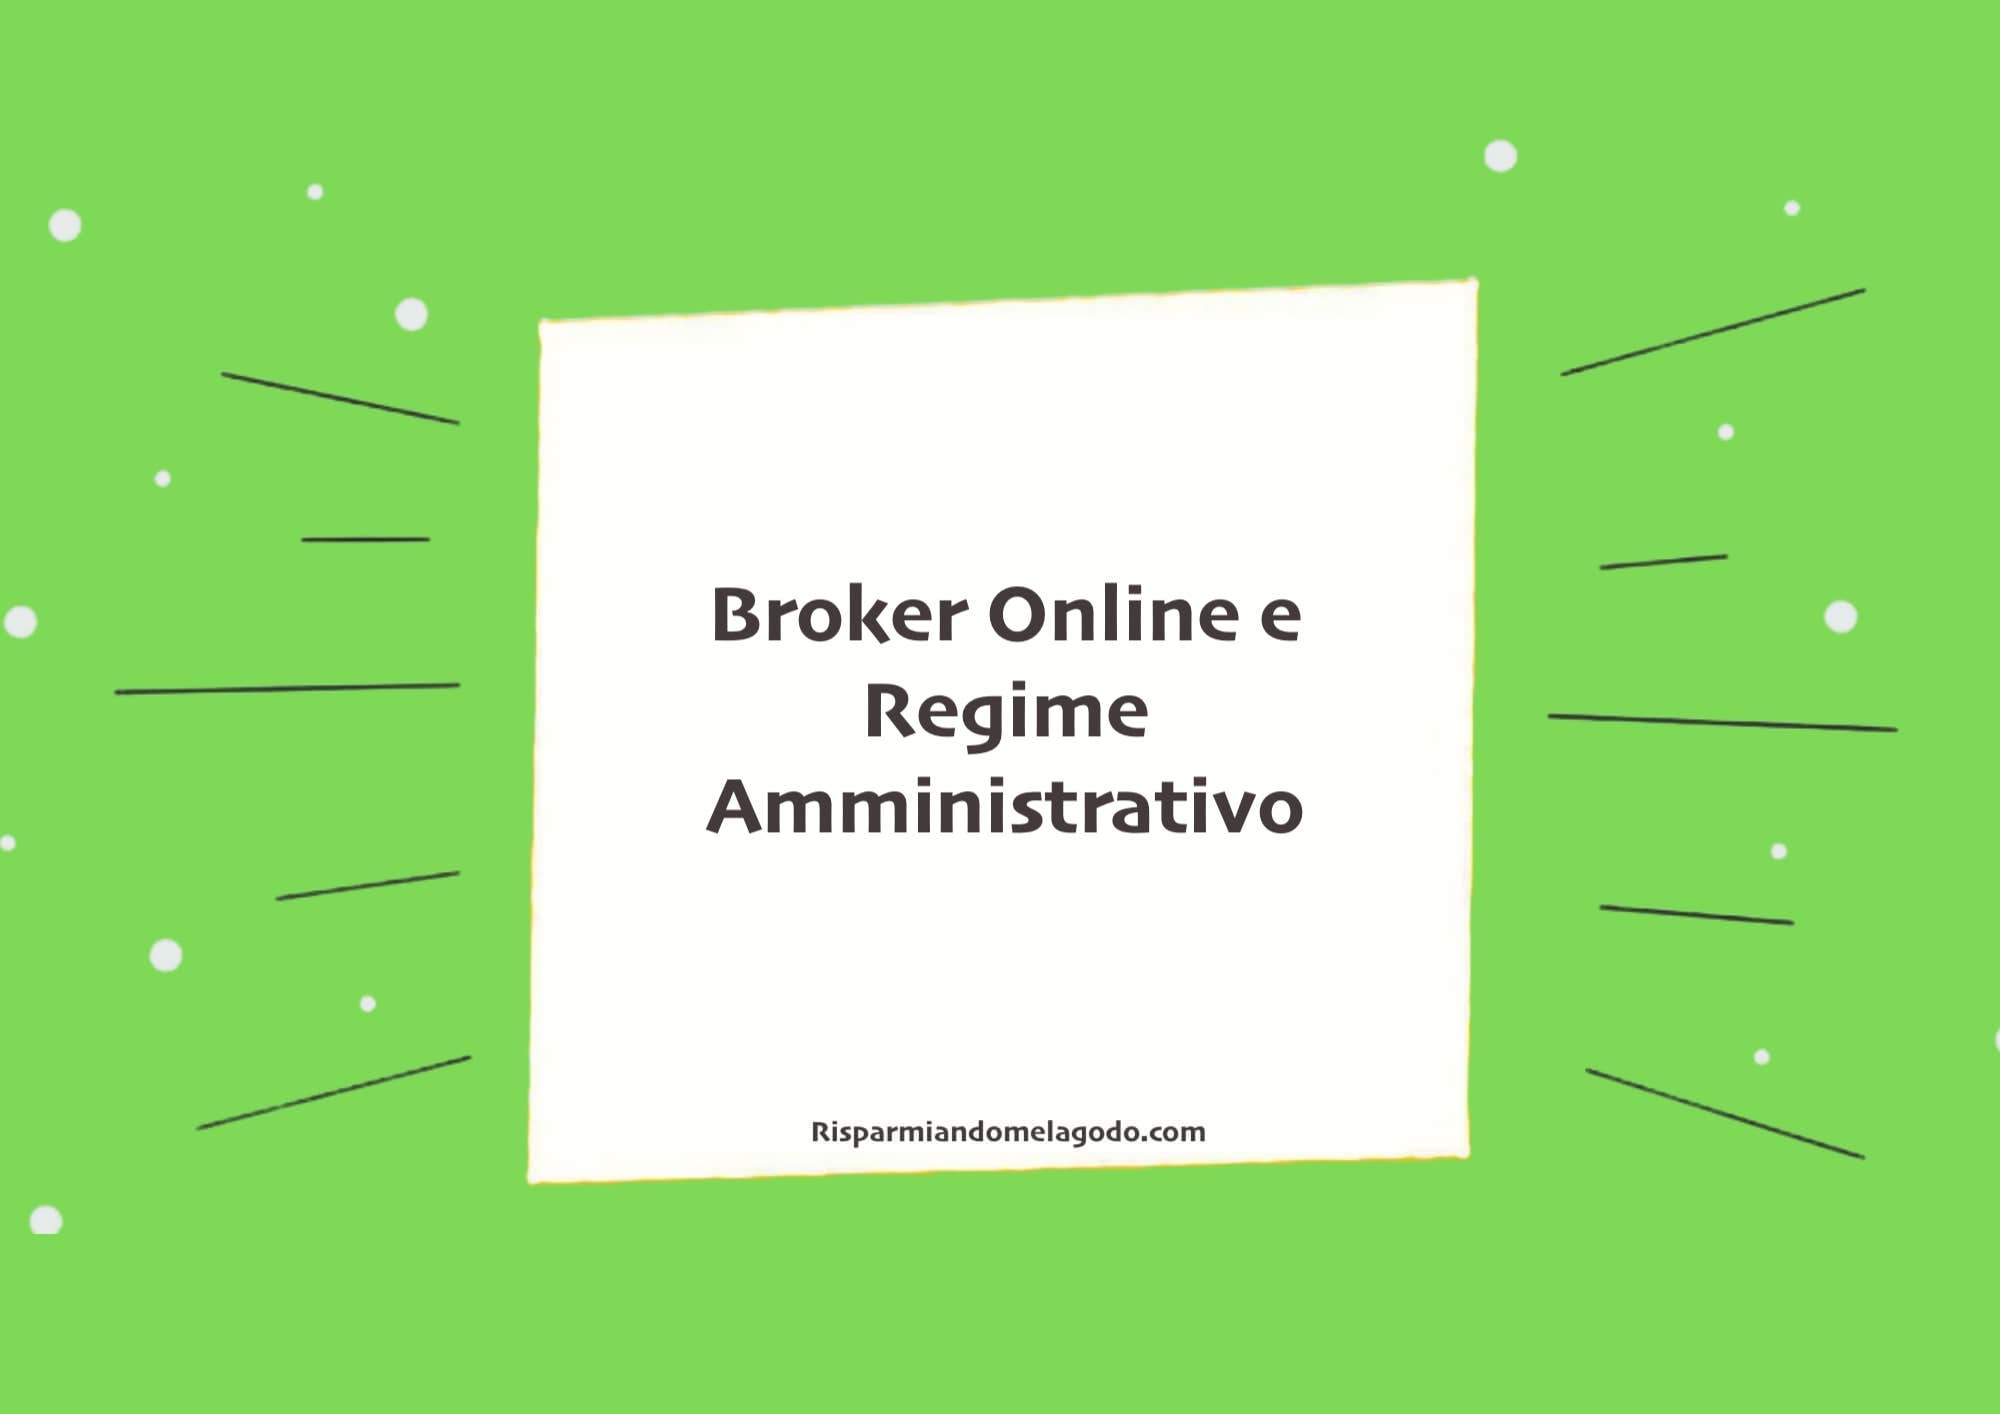 Broker Online e Regime Amministrativo